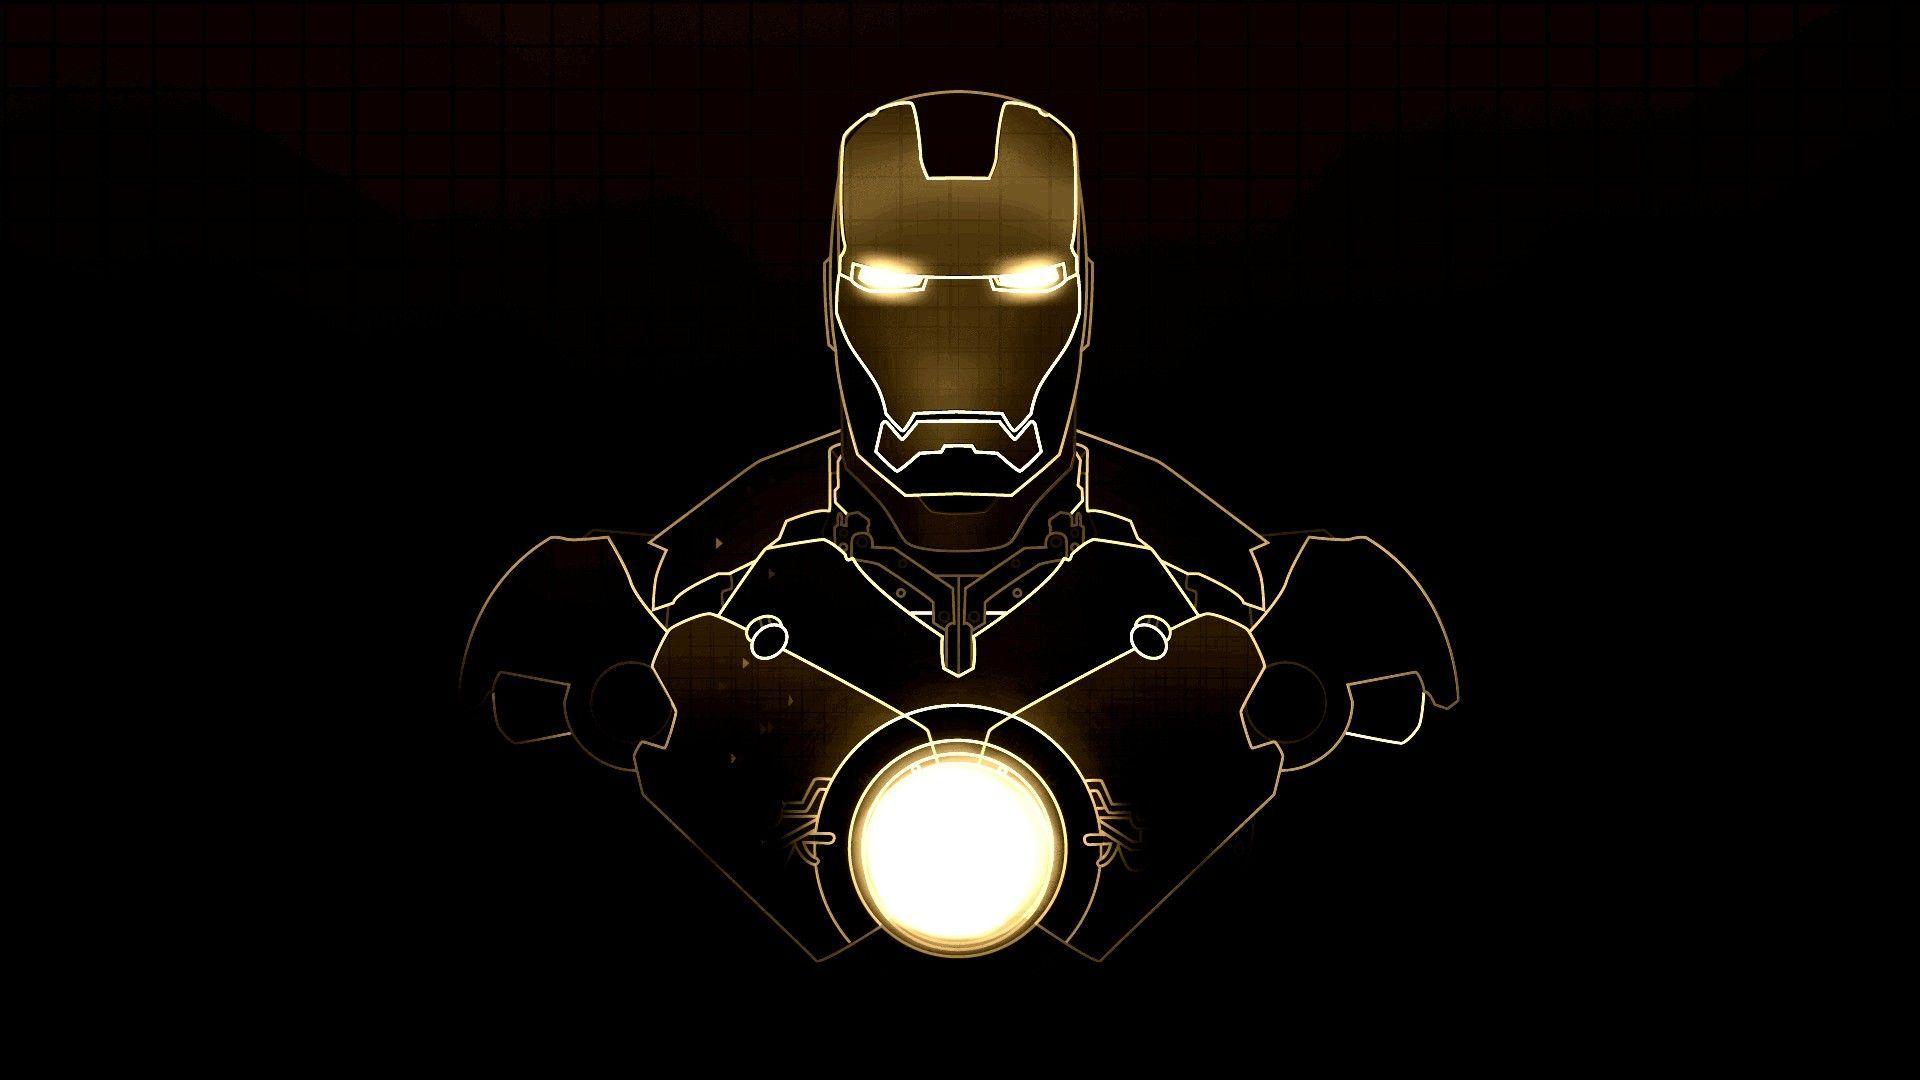 Wallpaper.wiki Arc Reactor Iron Man Background Full HD PIC